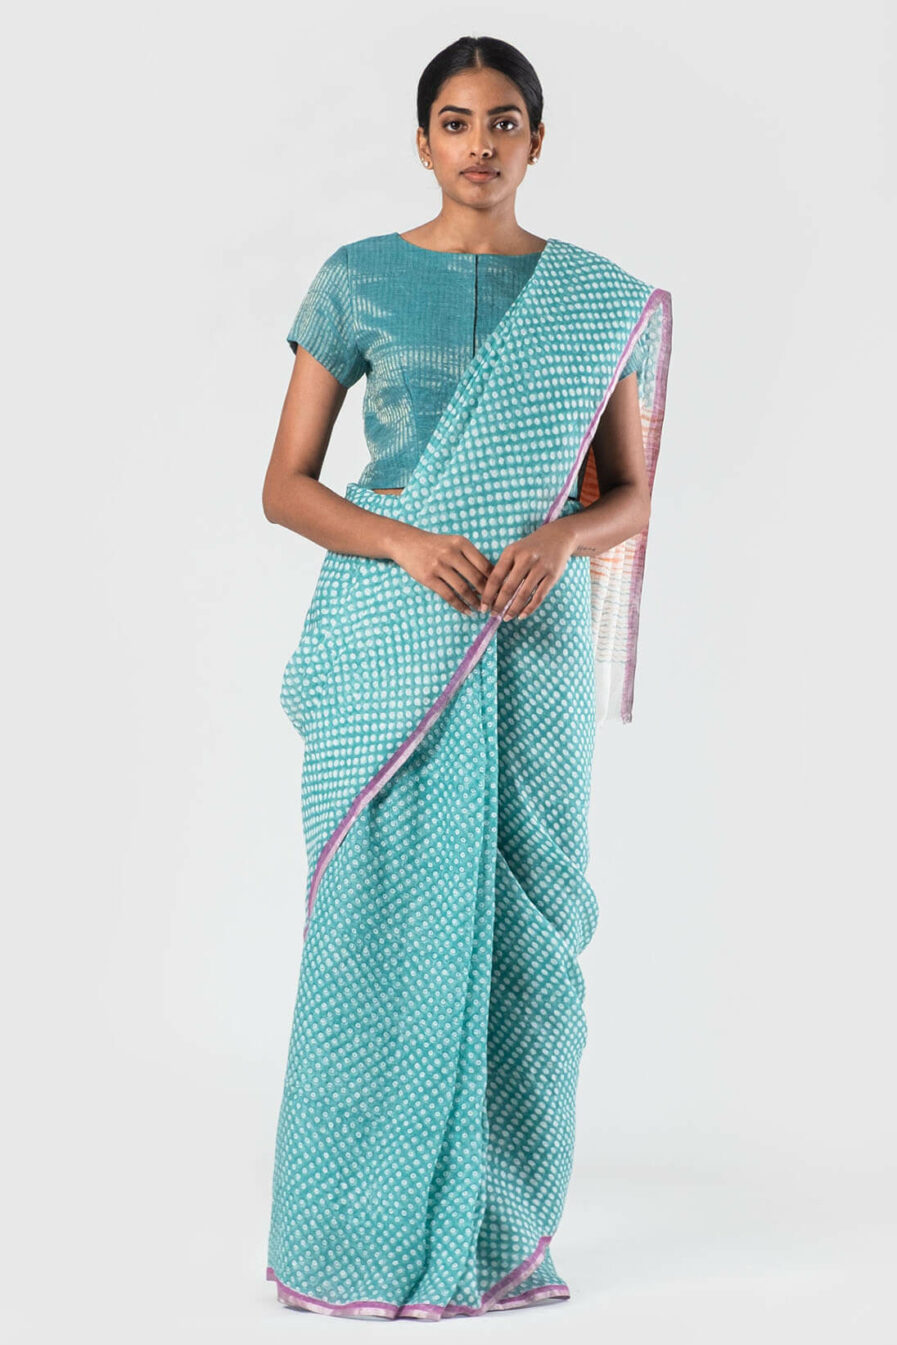 Anavila Colour tonic printed sari